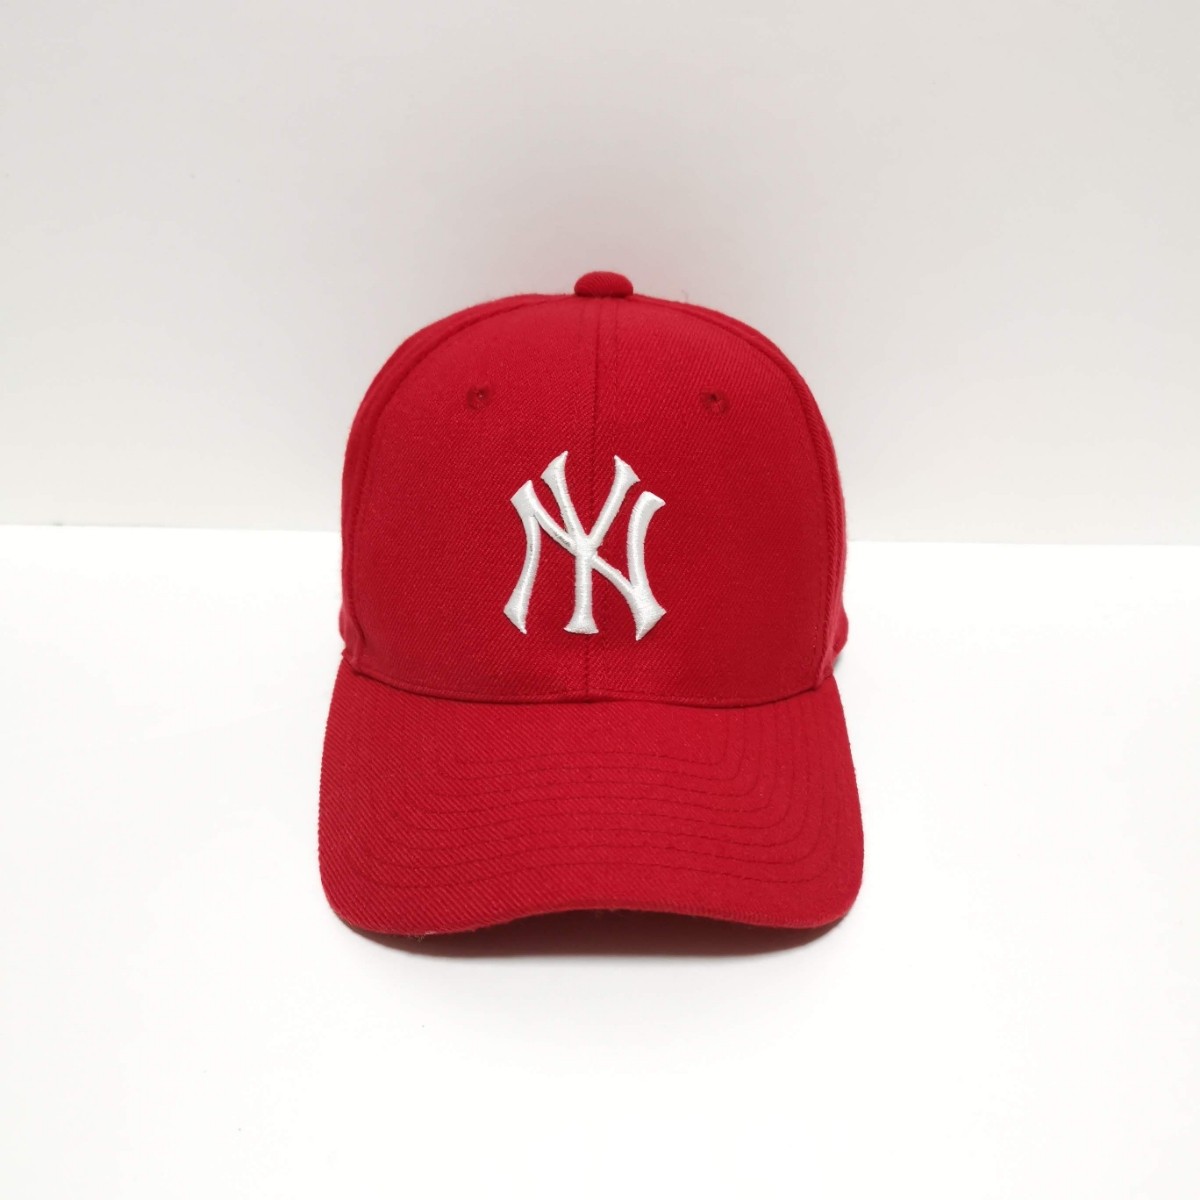 00s NY ヤンキース Yankees スナップバック キャップ CAP 赤